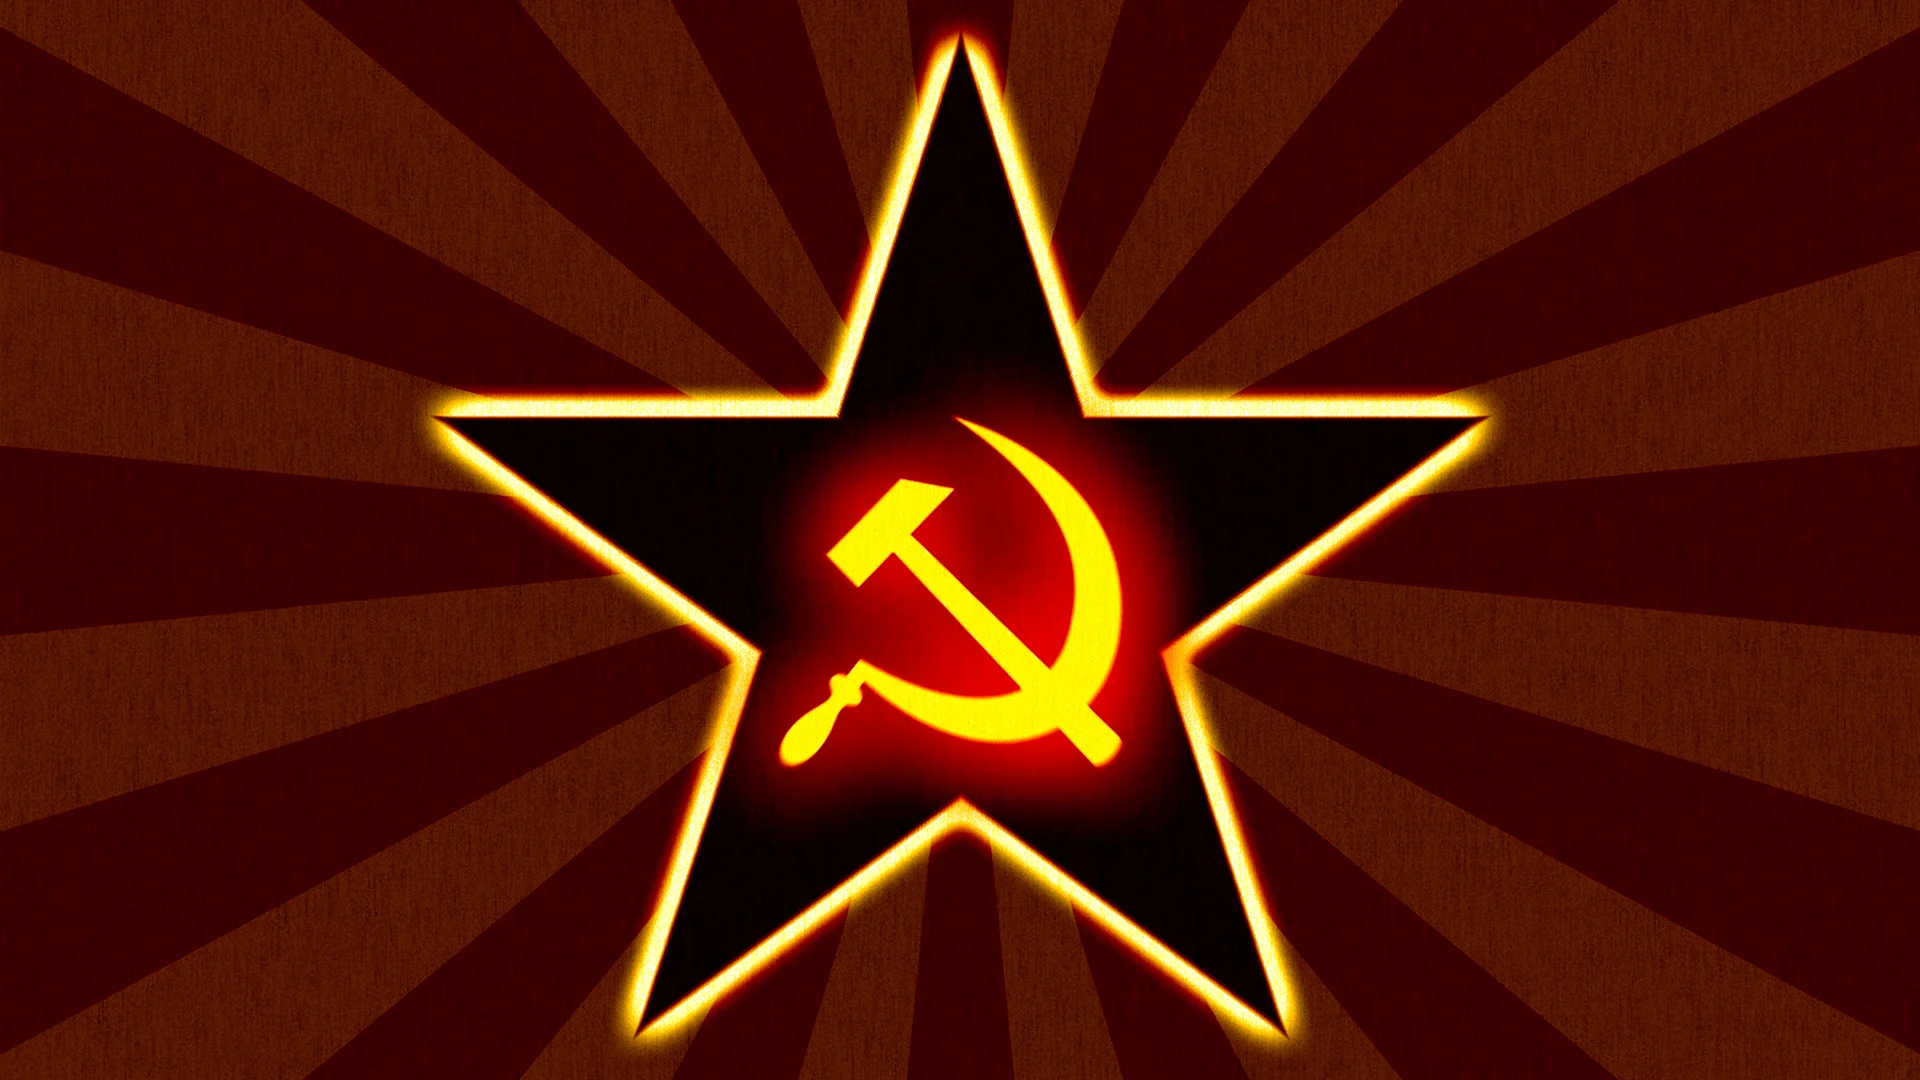 Флаг СССР Red Alert